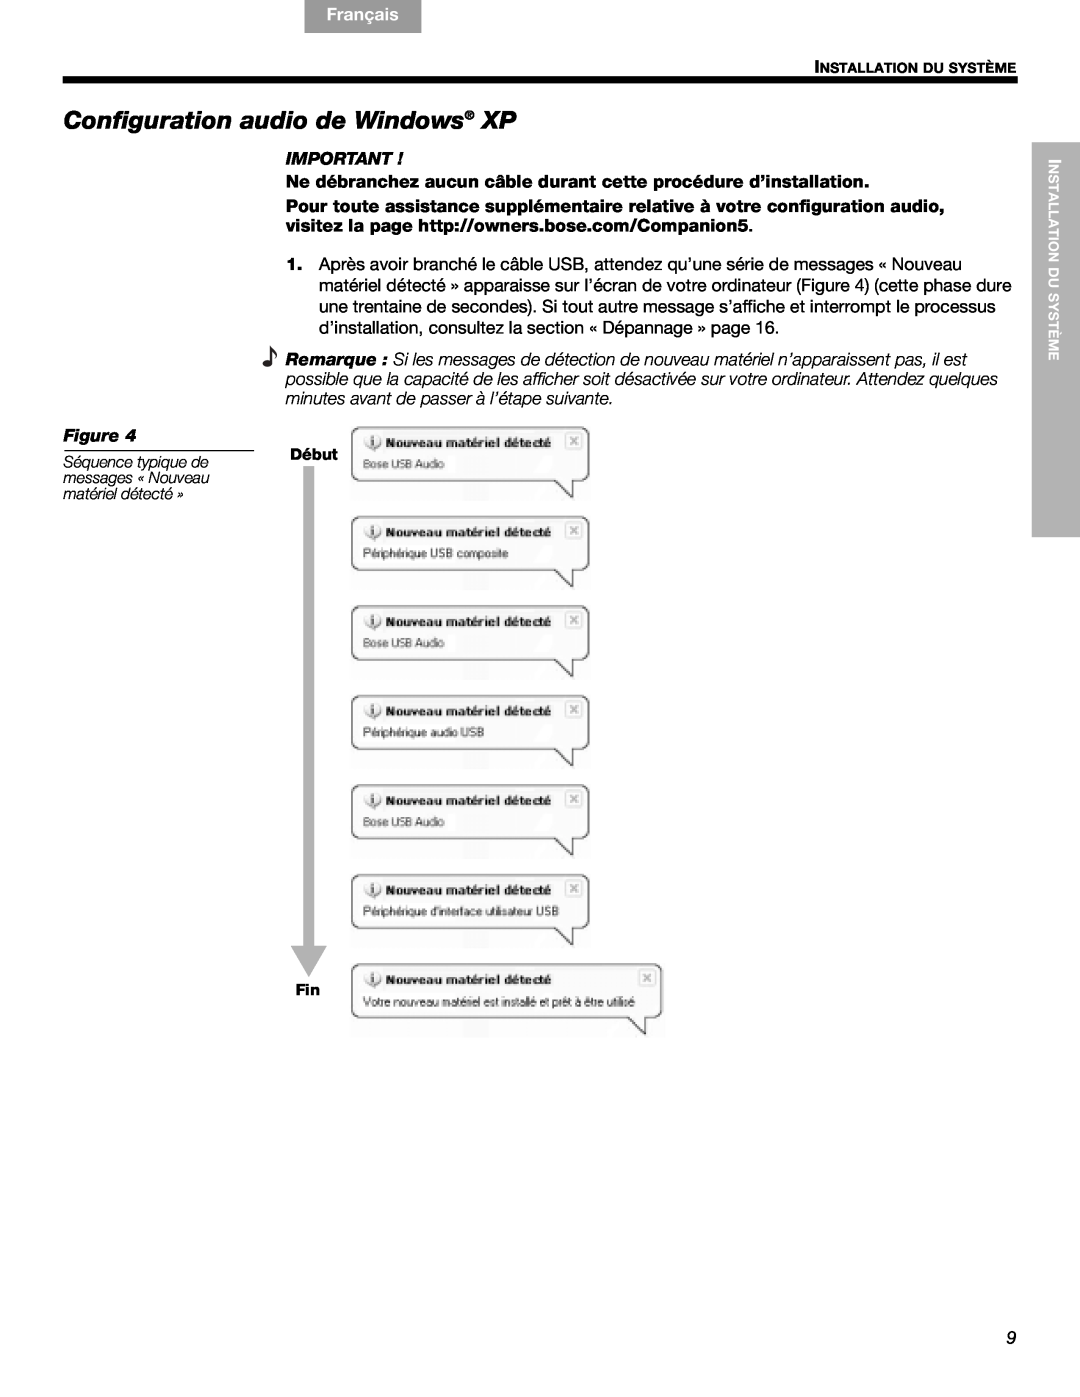 Bose Companion (R) 5, 40326 manual Configuration audio de Windows XP, English, Español, Français 